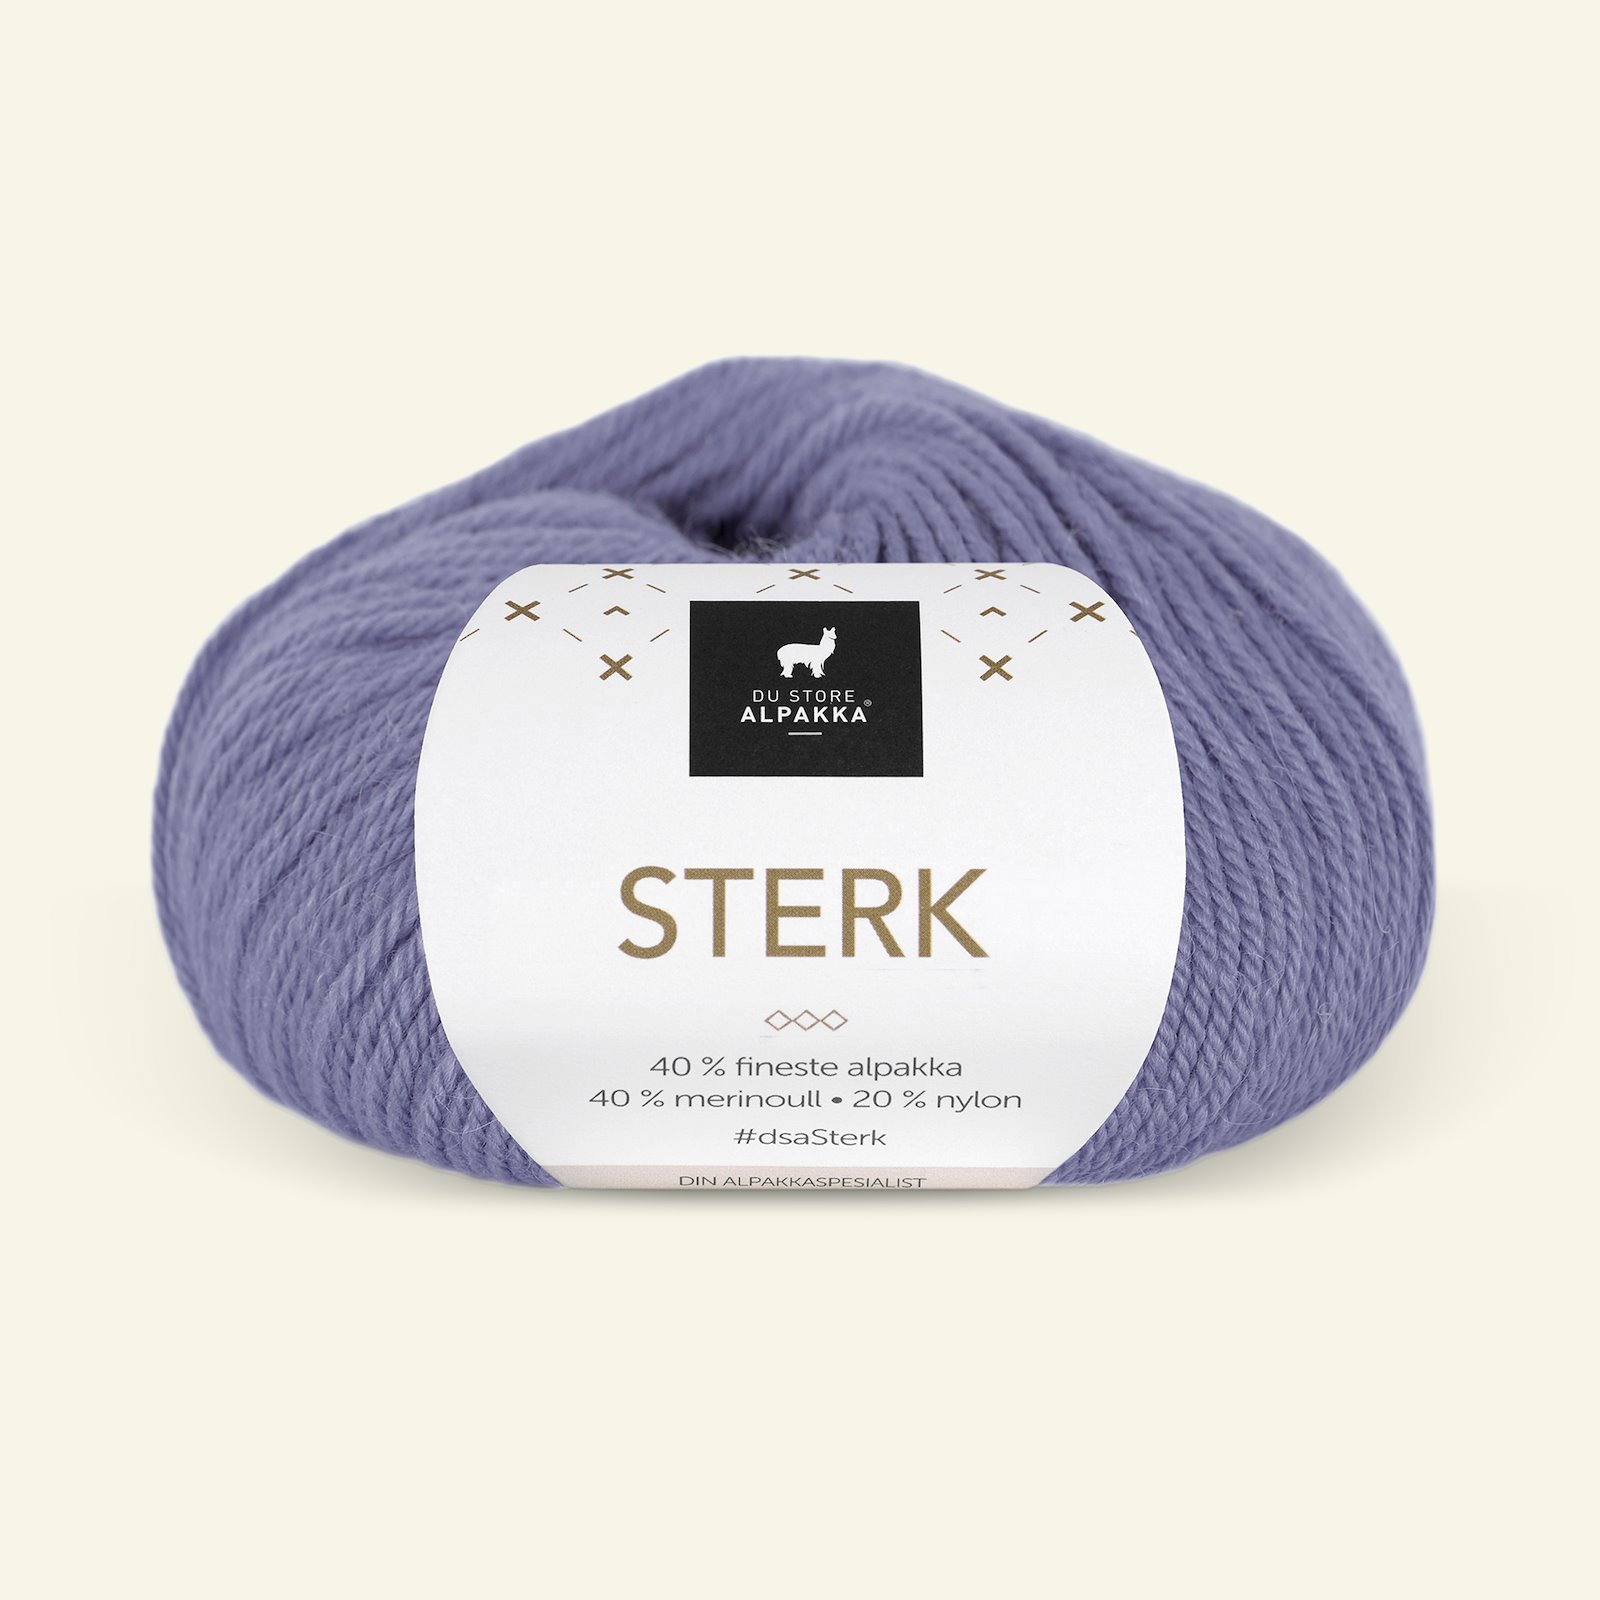 Du Store Alpakka, alpakka merino blandingsgarn "Sterk", lilac (909) 90000701_pack